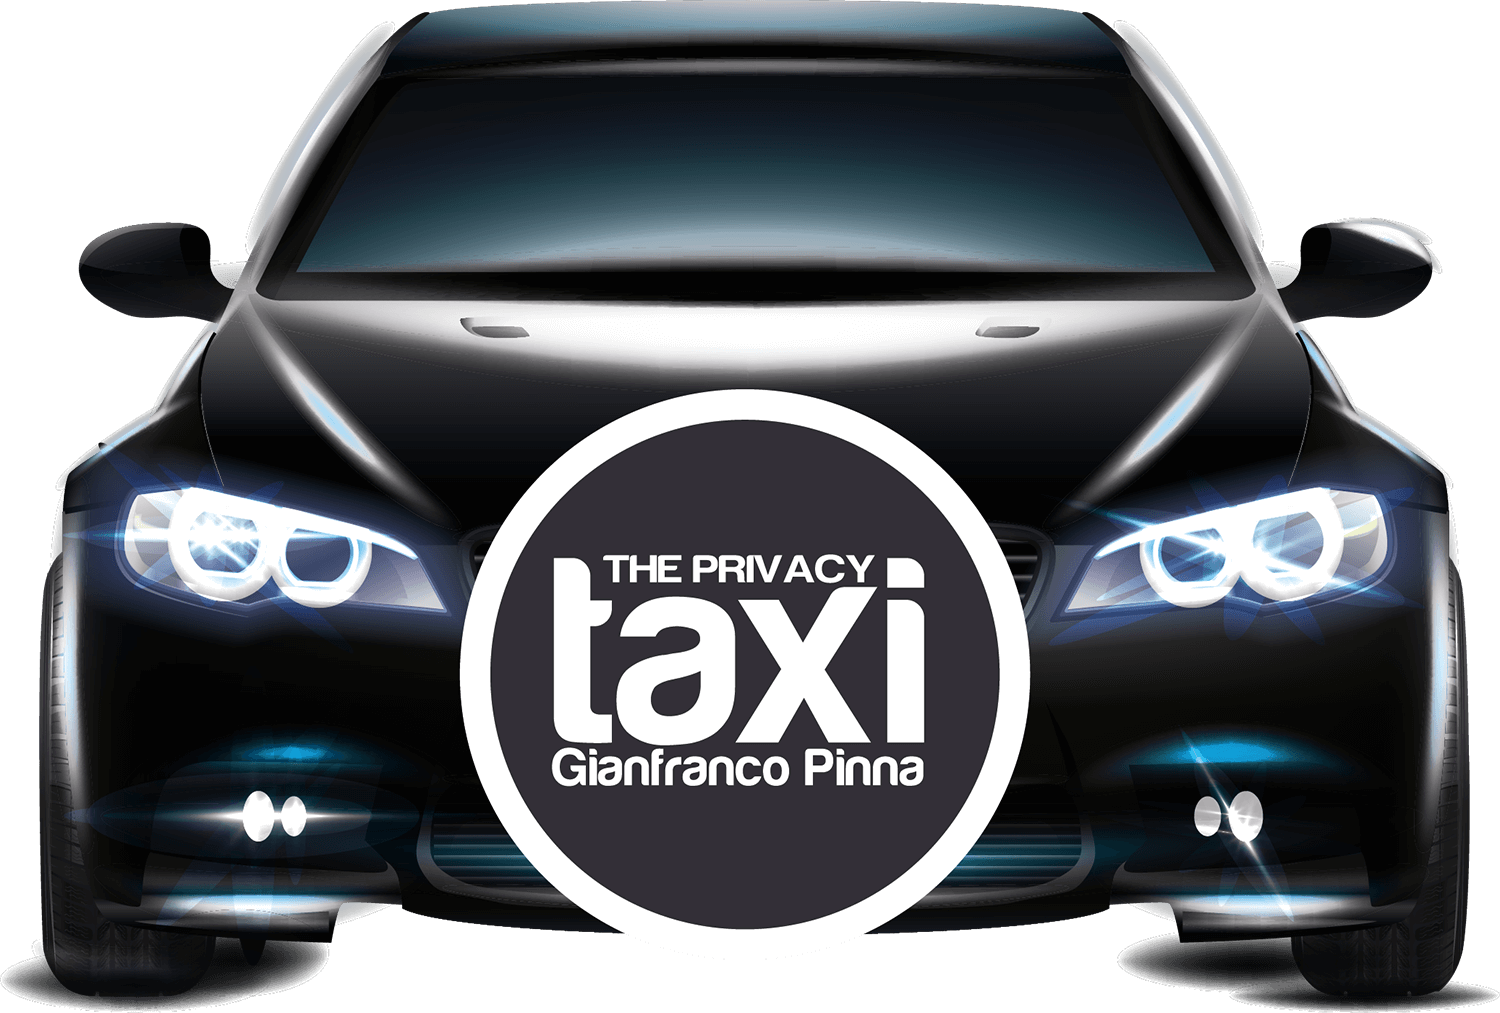 The Privacy Taxi Fossano - Taxi service Gianfranco Pinna